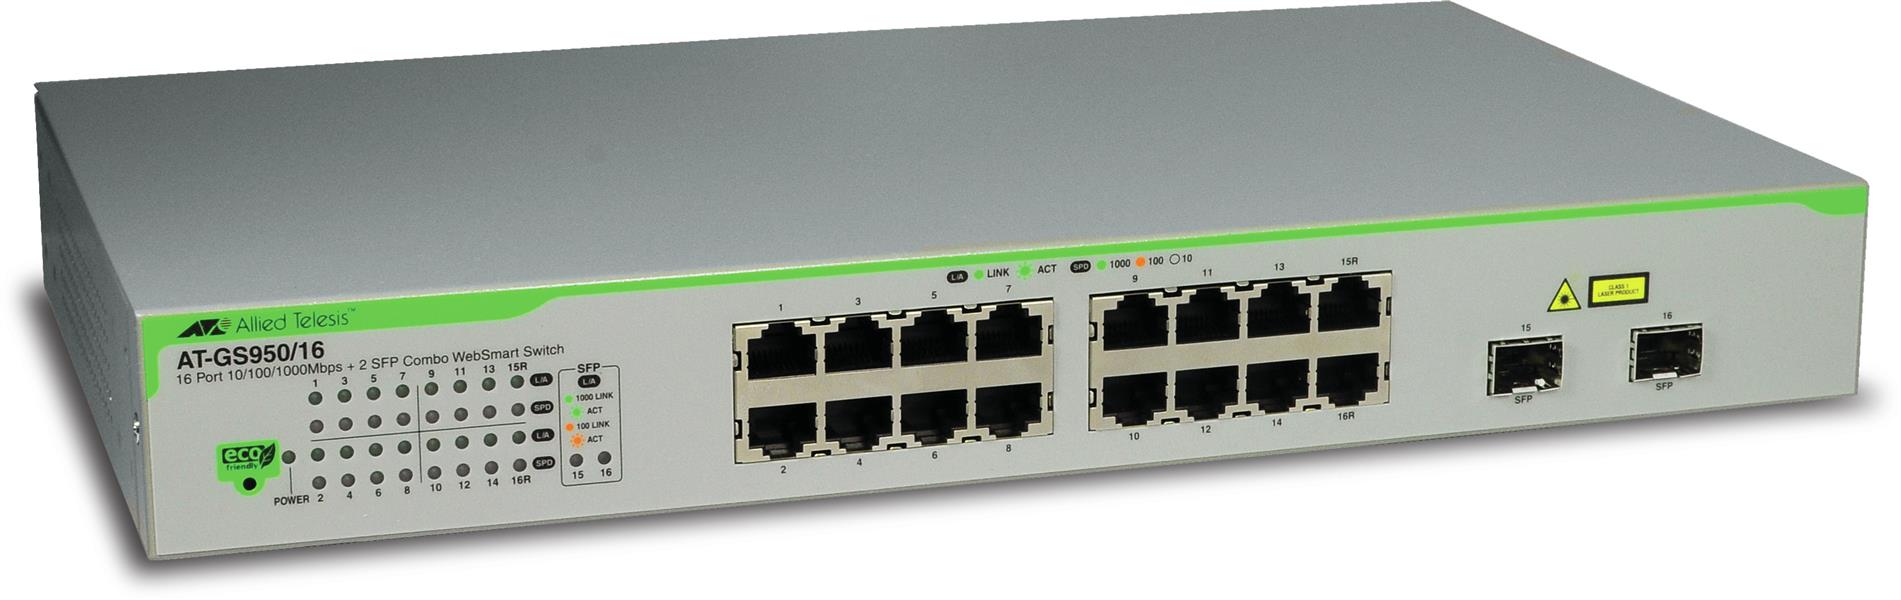 Allied Telesis AT-GS950/16-50 Managed L2 Gigabit Ethernet (10/100/1000) Wit 1U